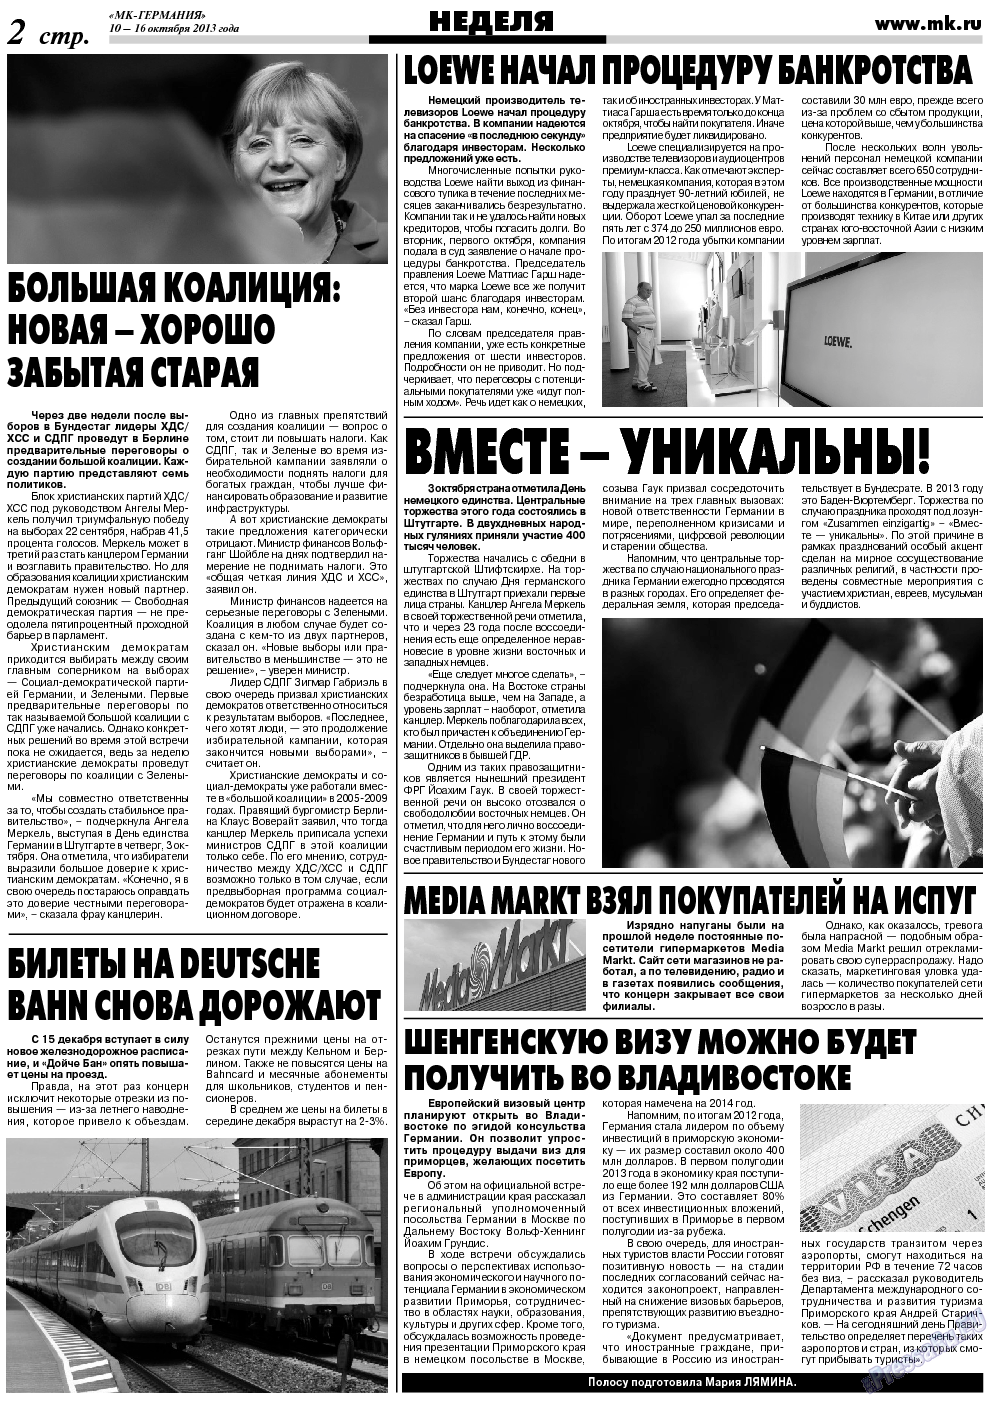 МК-Германия, газета. 2013 №41 стр.2